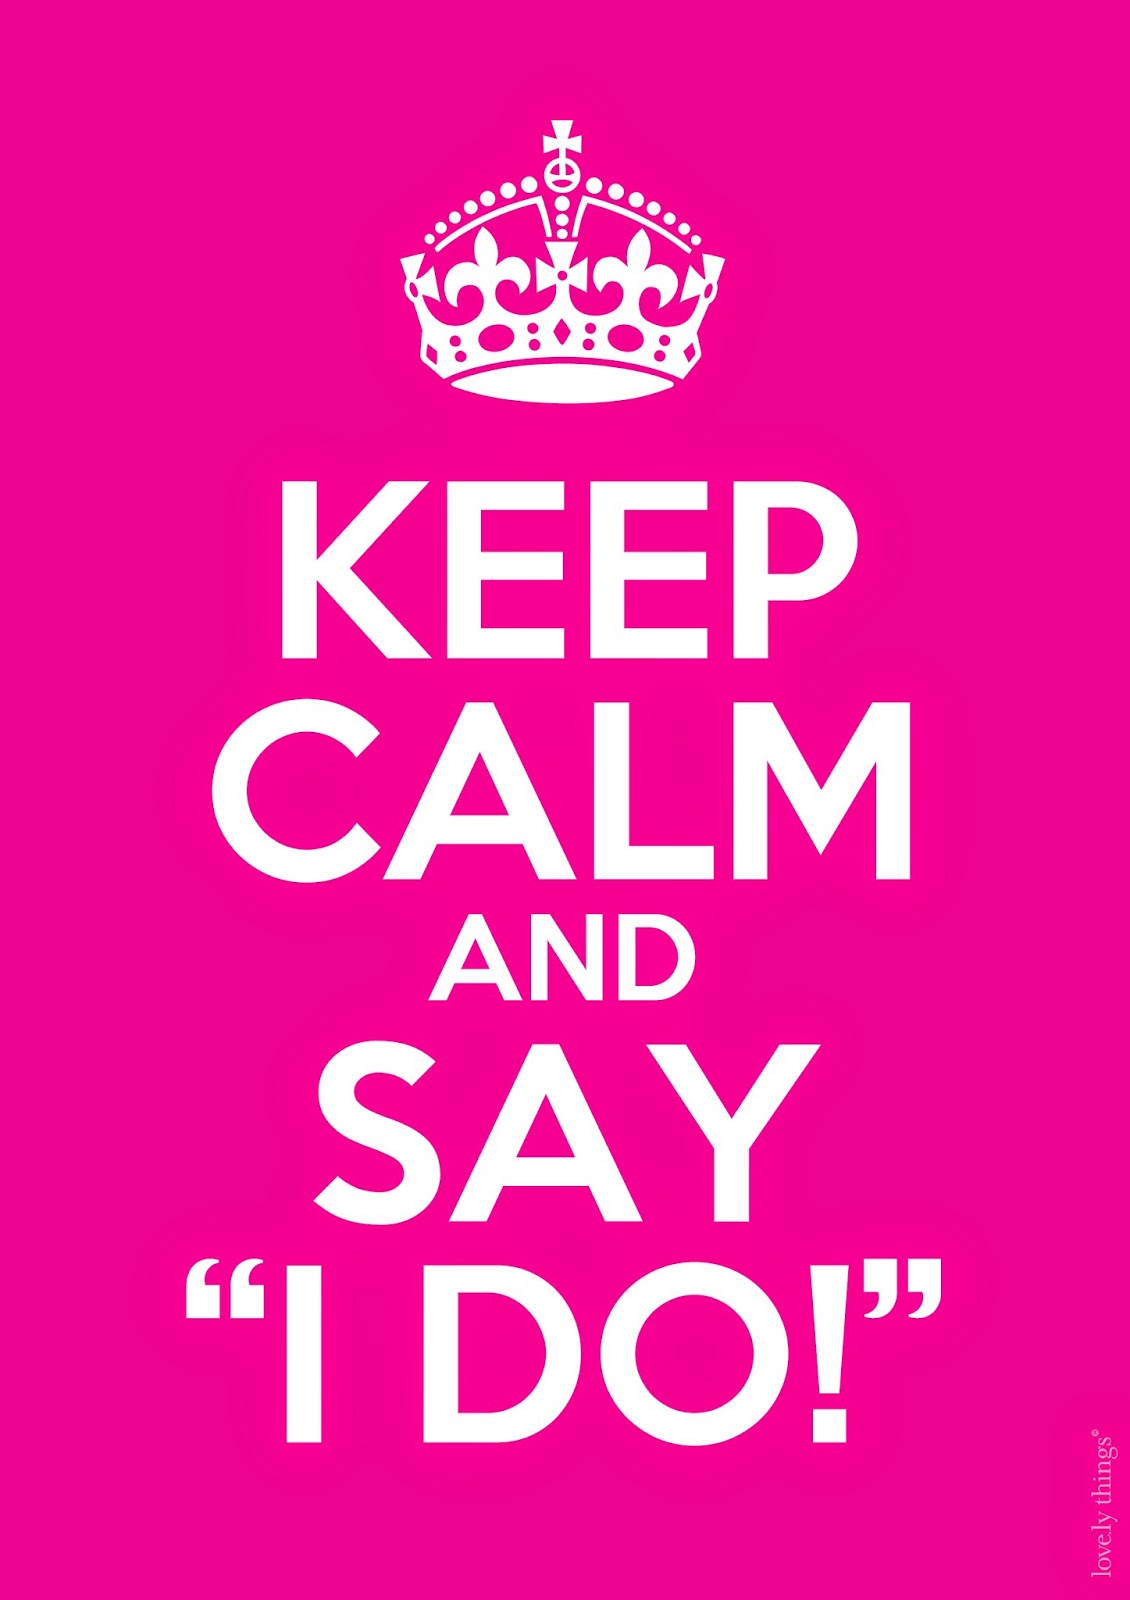 Keep calm and say i do